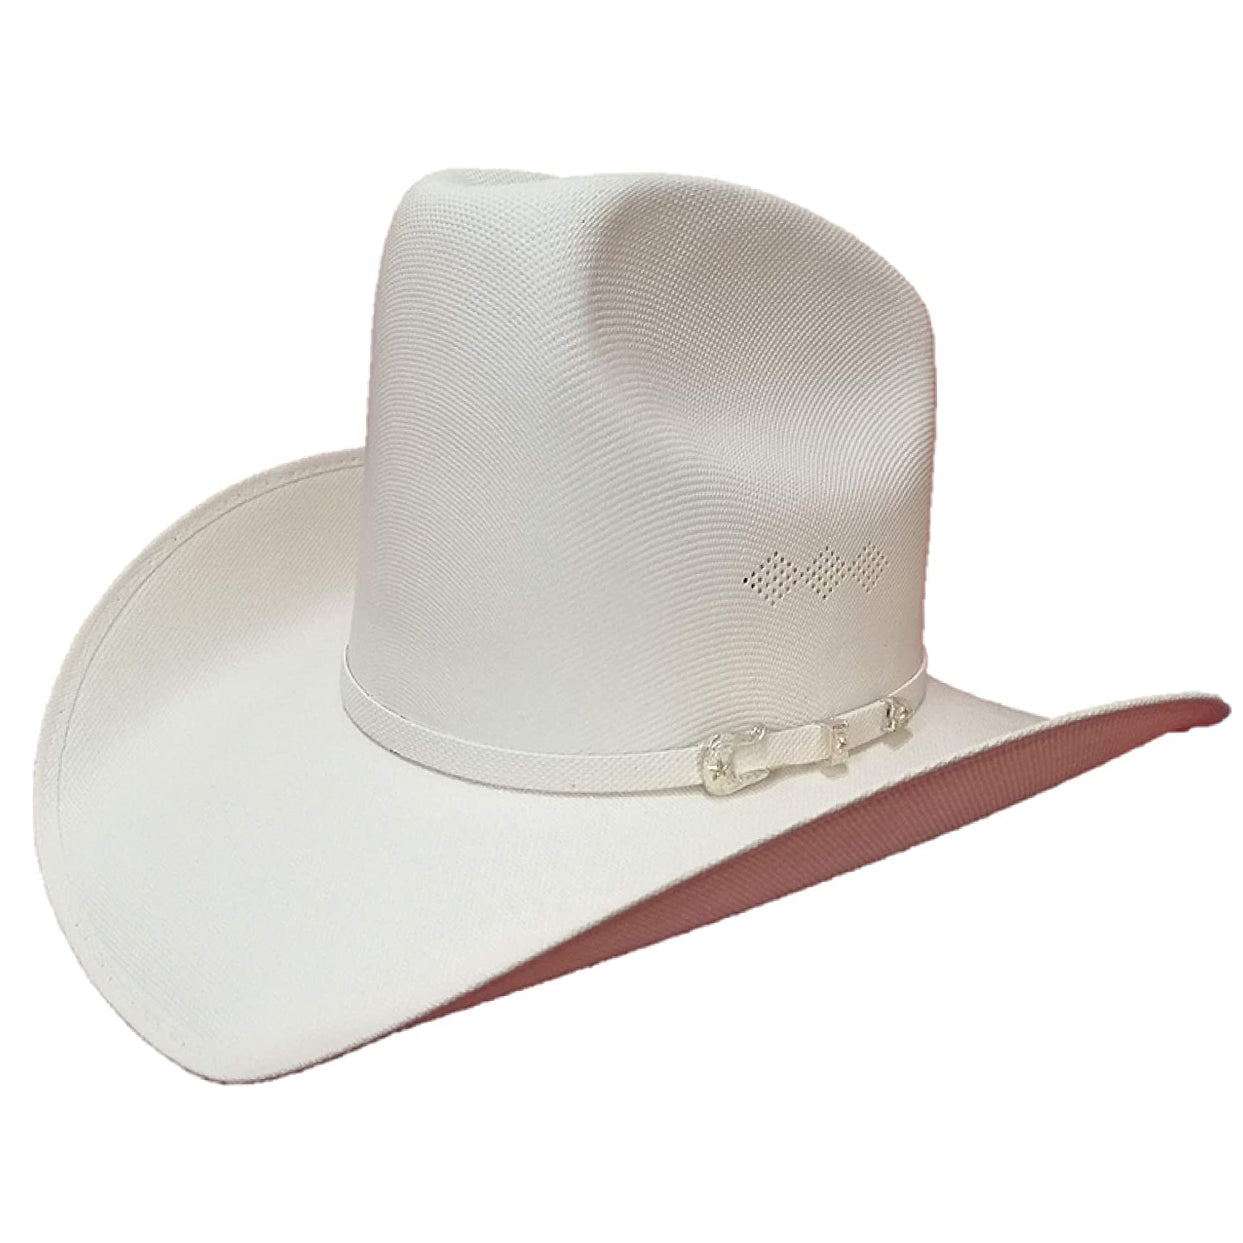 Arizona 1000x Cowboy Hat